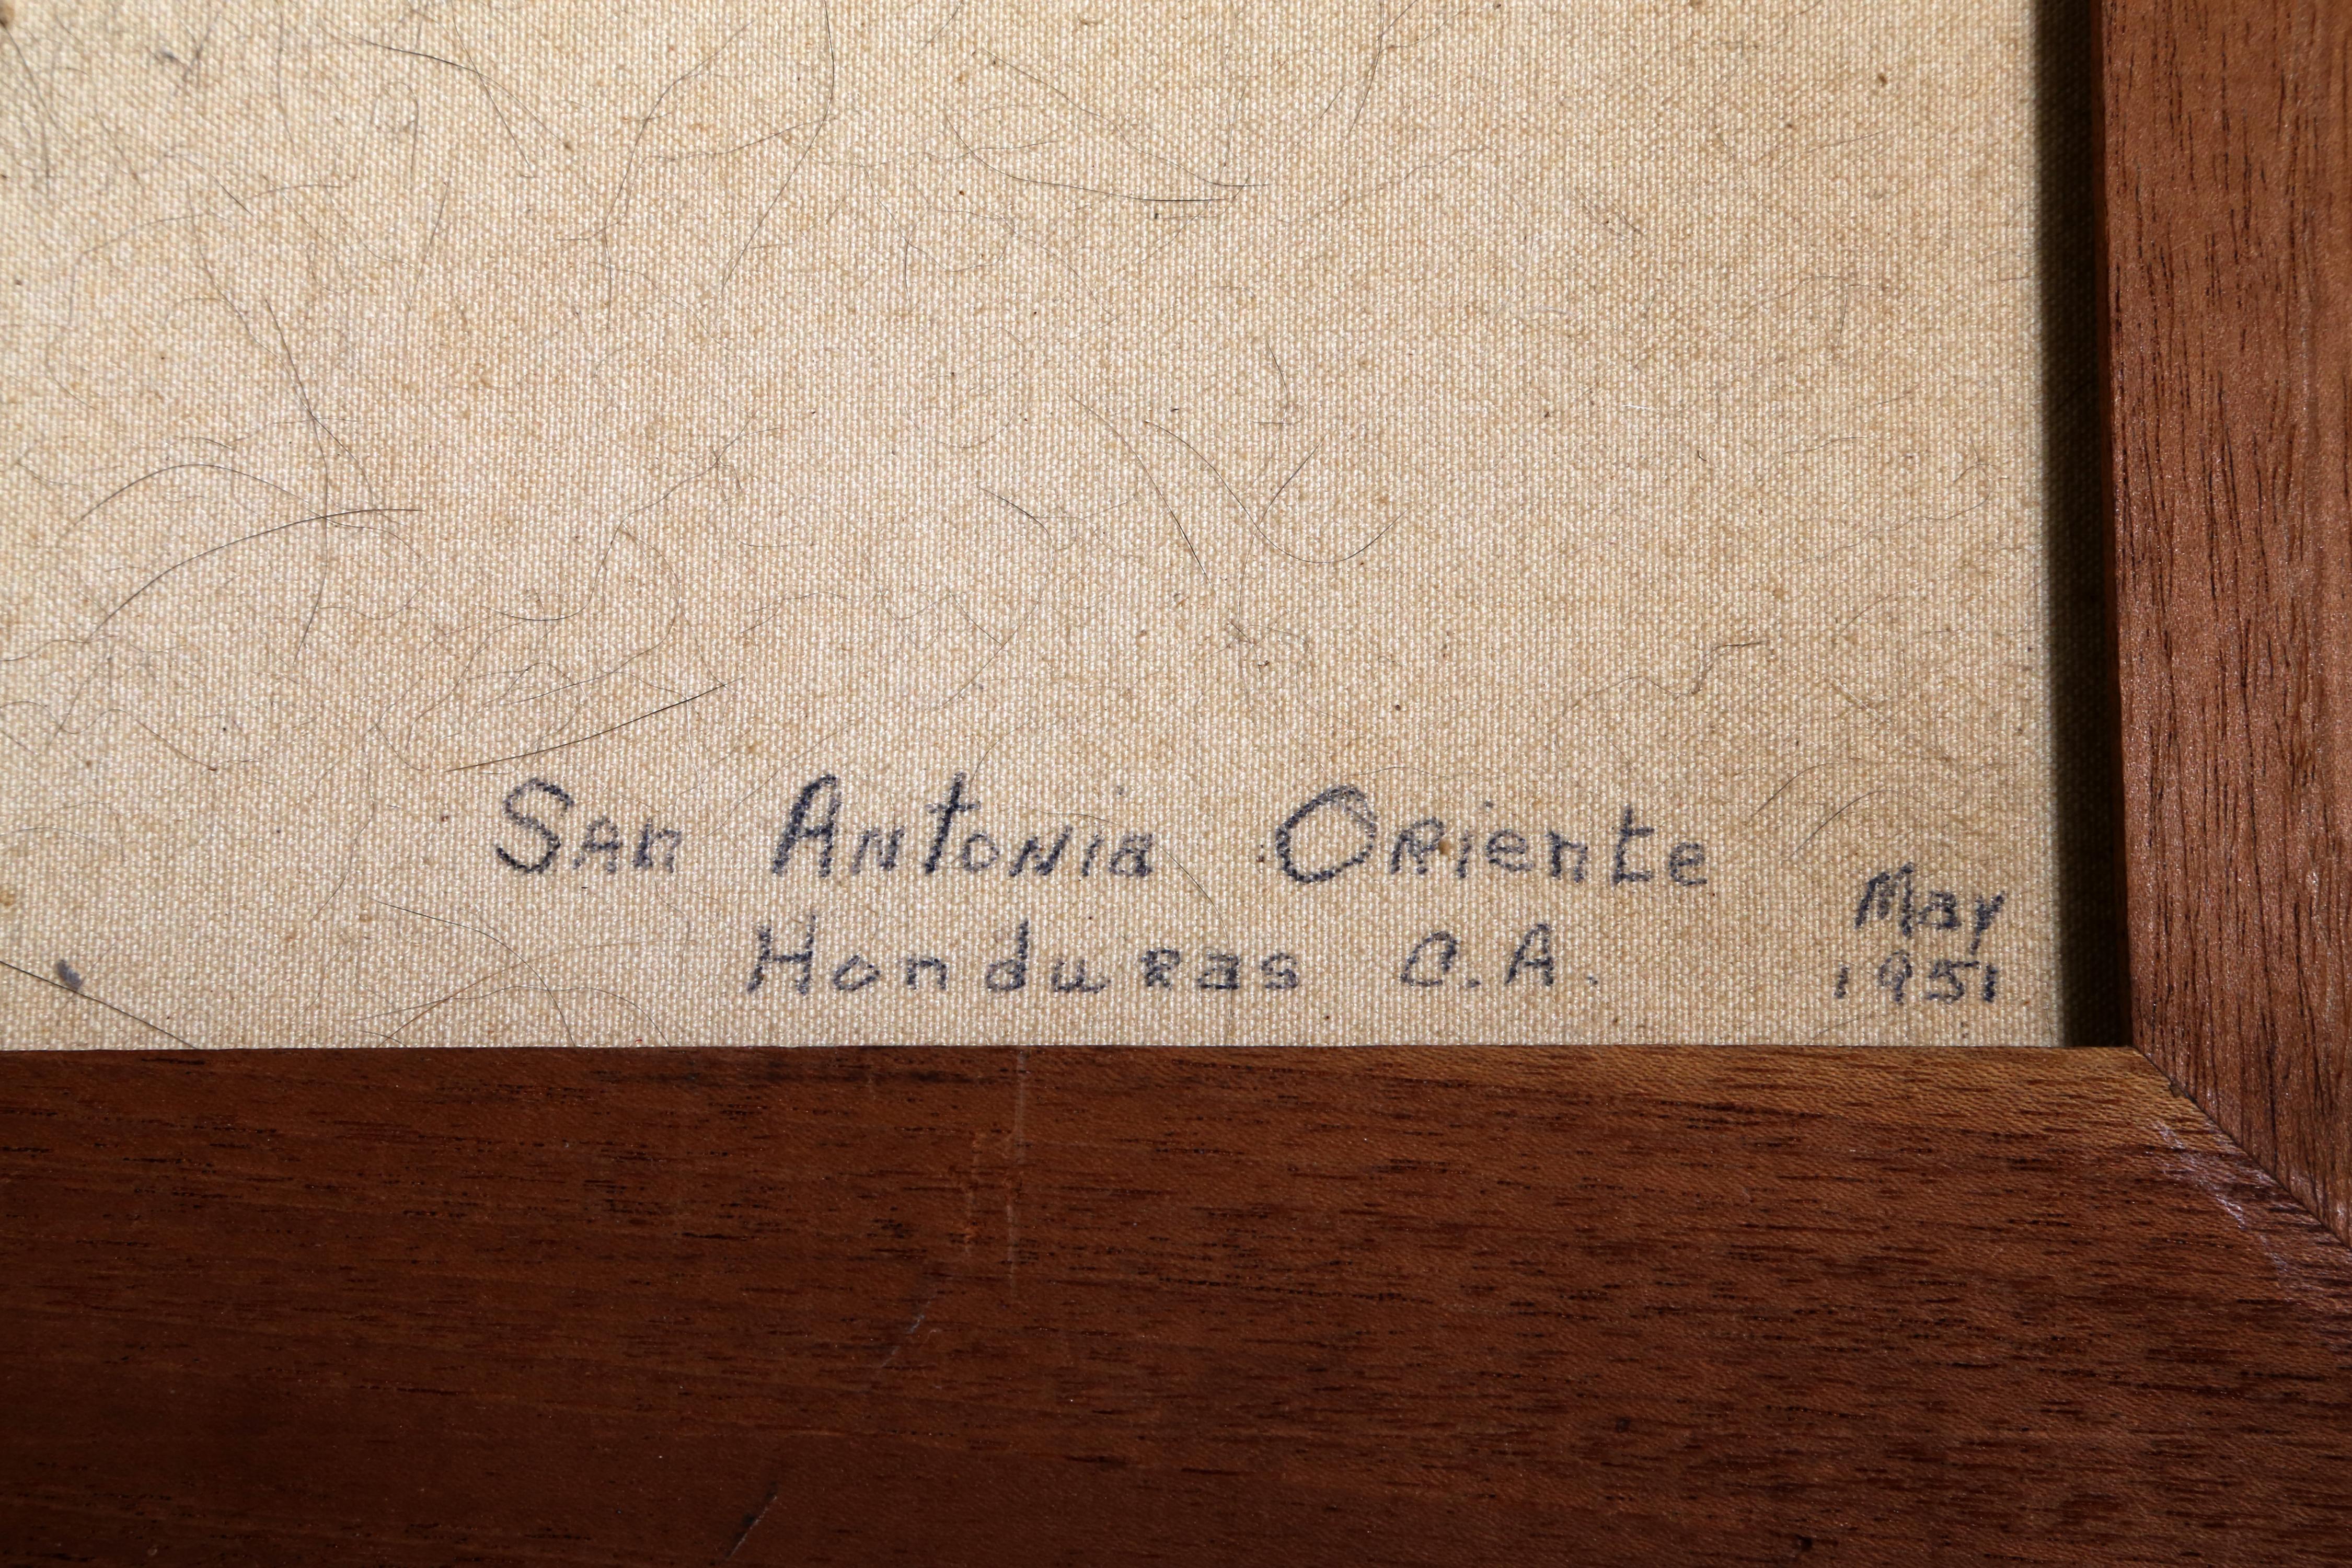 Artist: Jose Antonio Velasquez, Honduran (1906 - 1983)
Title: San Antonio Oriente, Honduras C.A. 
Year: 1951
Medium: Oil on Canvas, signed and dated l.r. 
Size: 16.5 x 22 in. (41.91 x 55.88 cm)
Frame Size: 20.5 x 26 inches